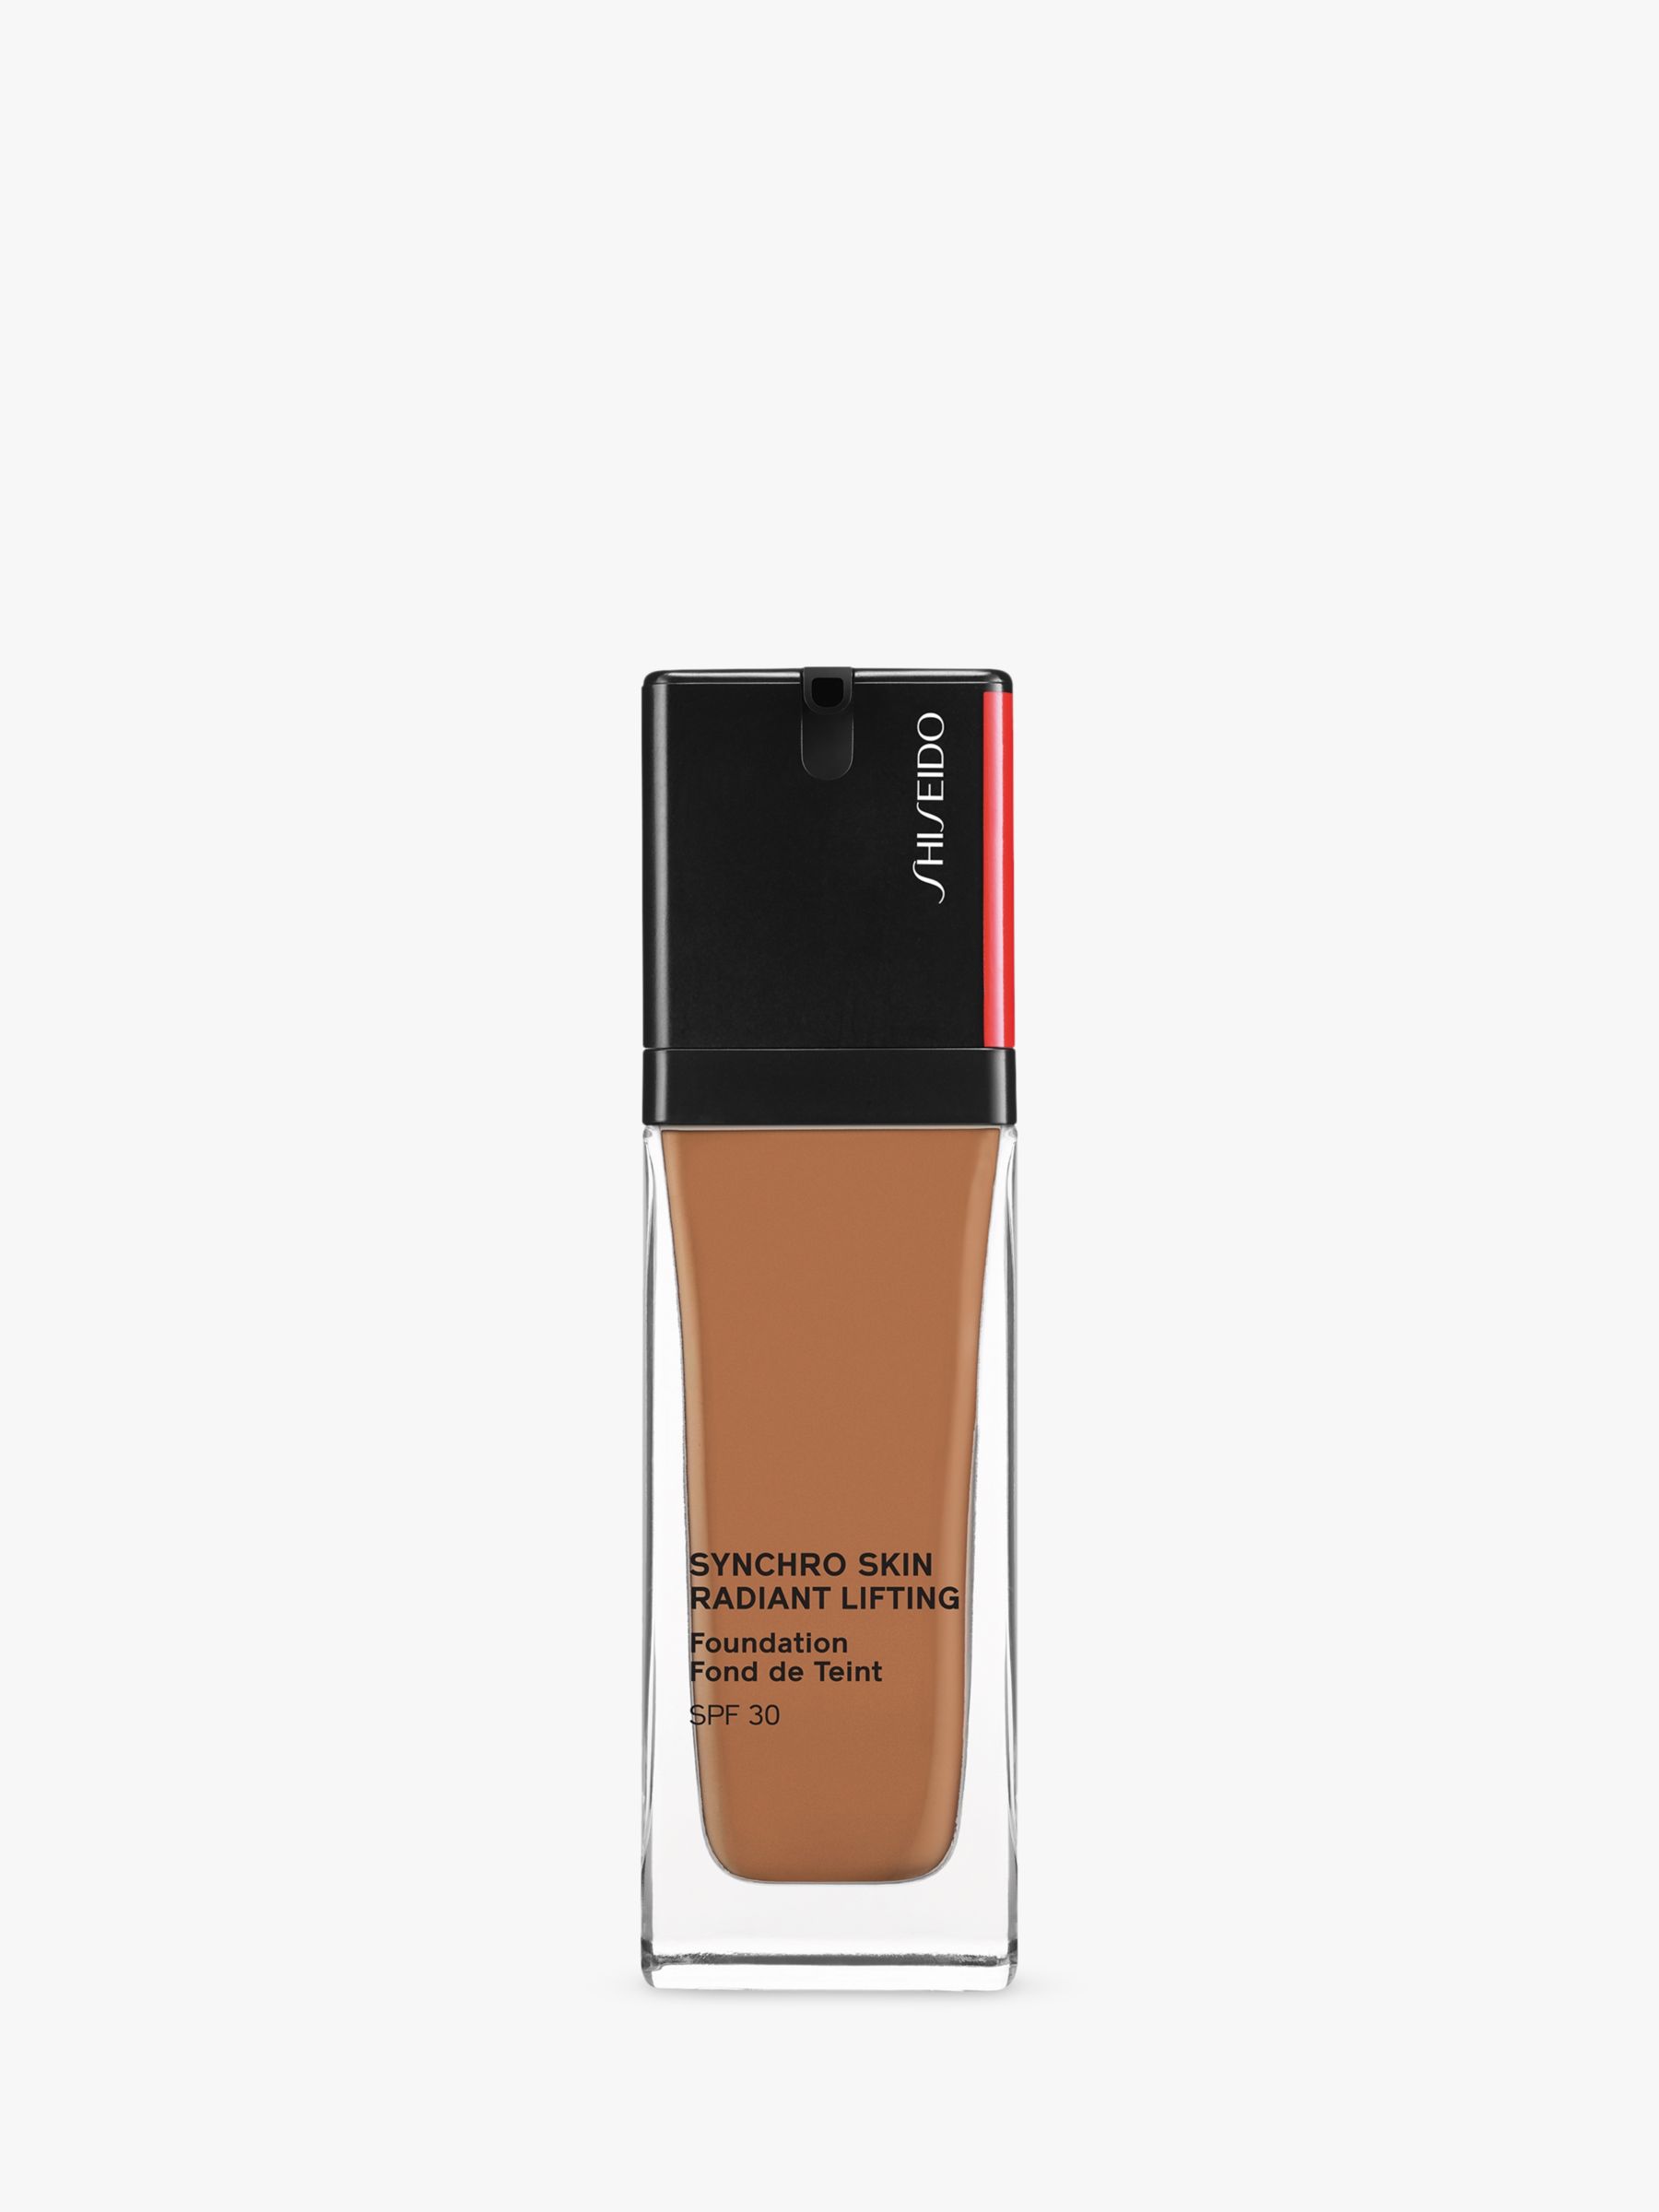 Shiseido Synchro Skin Radiant Lifting Foundation SPF 30, 430 Cedar 1